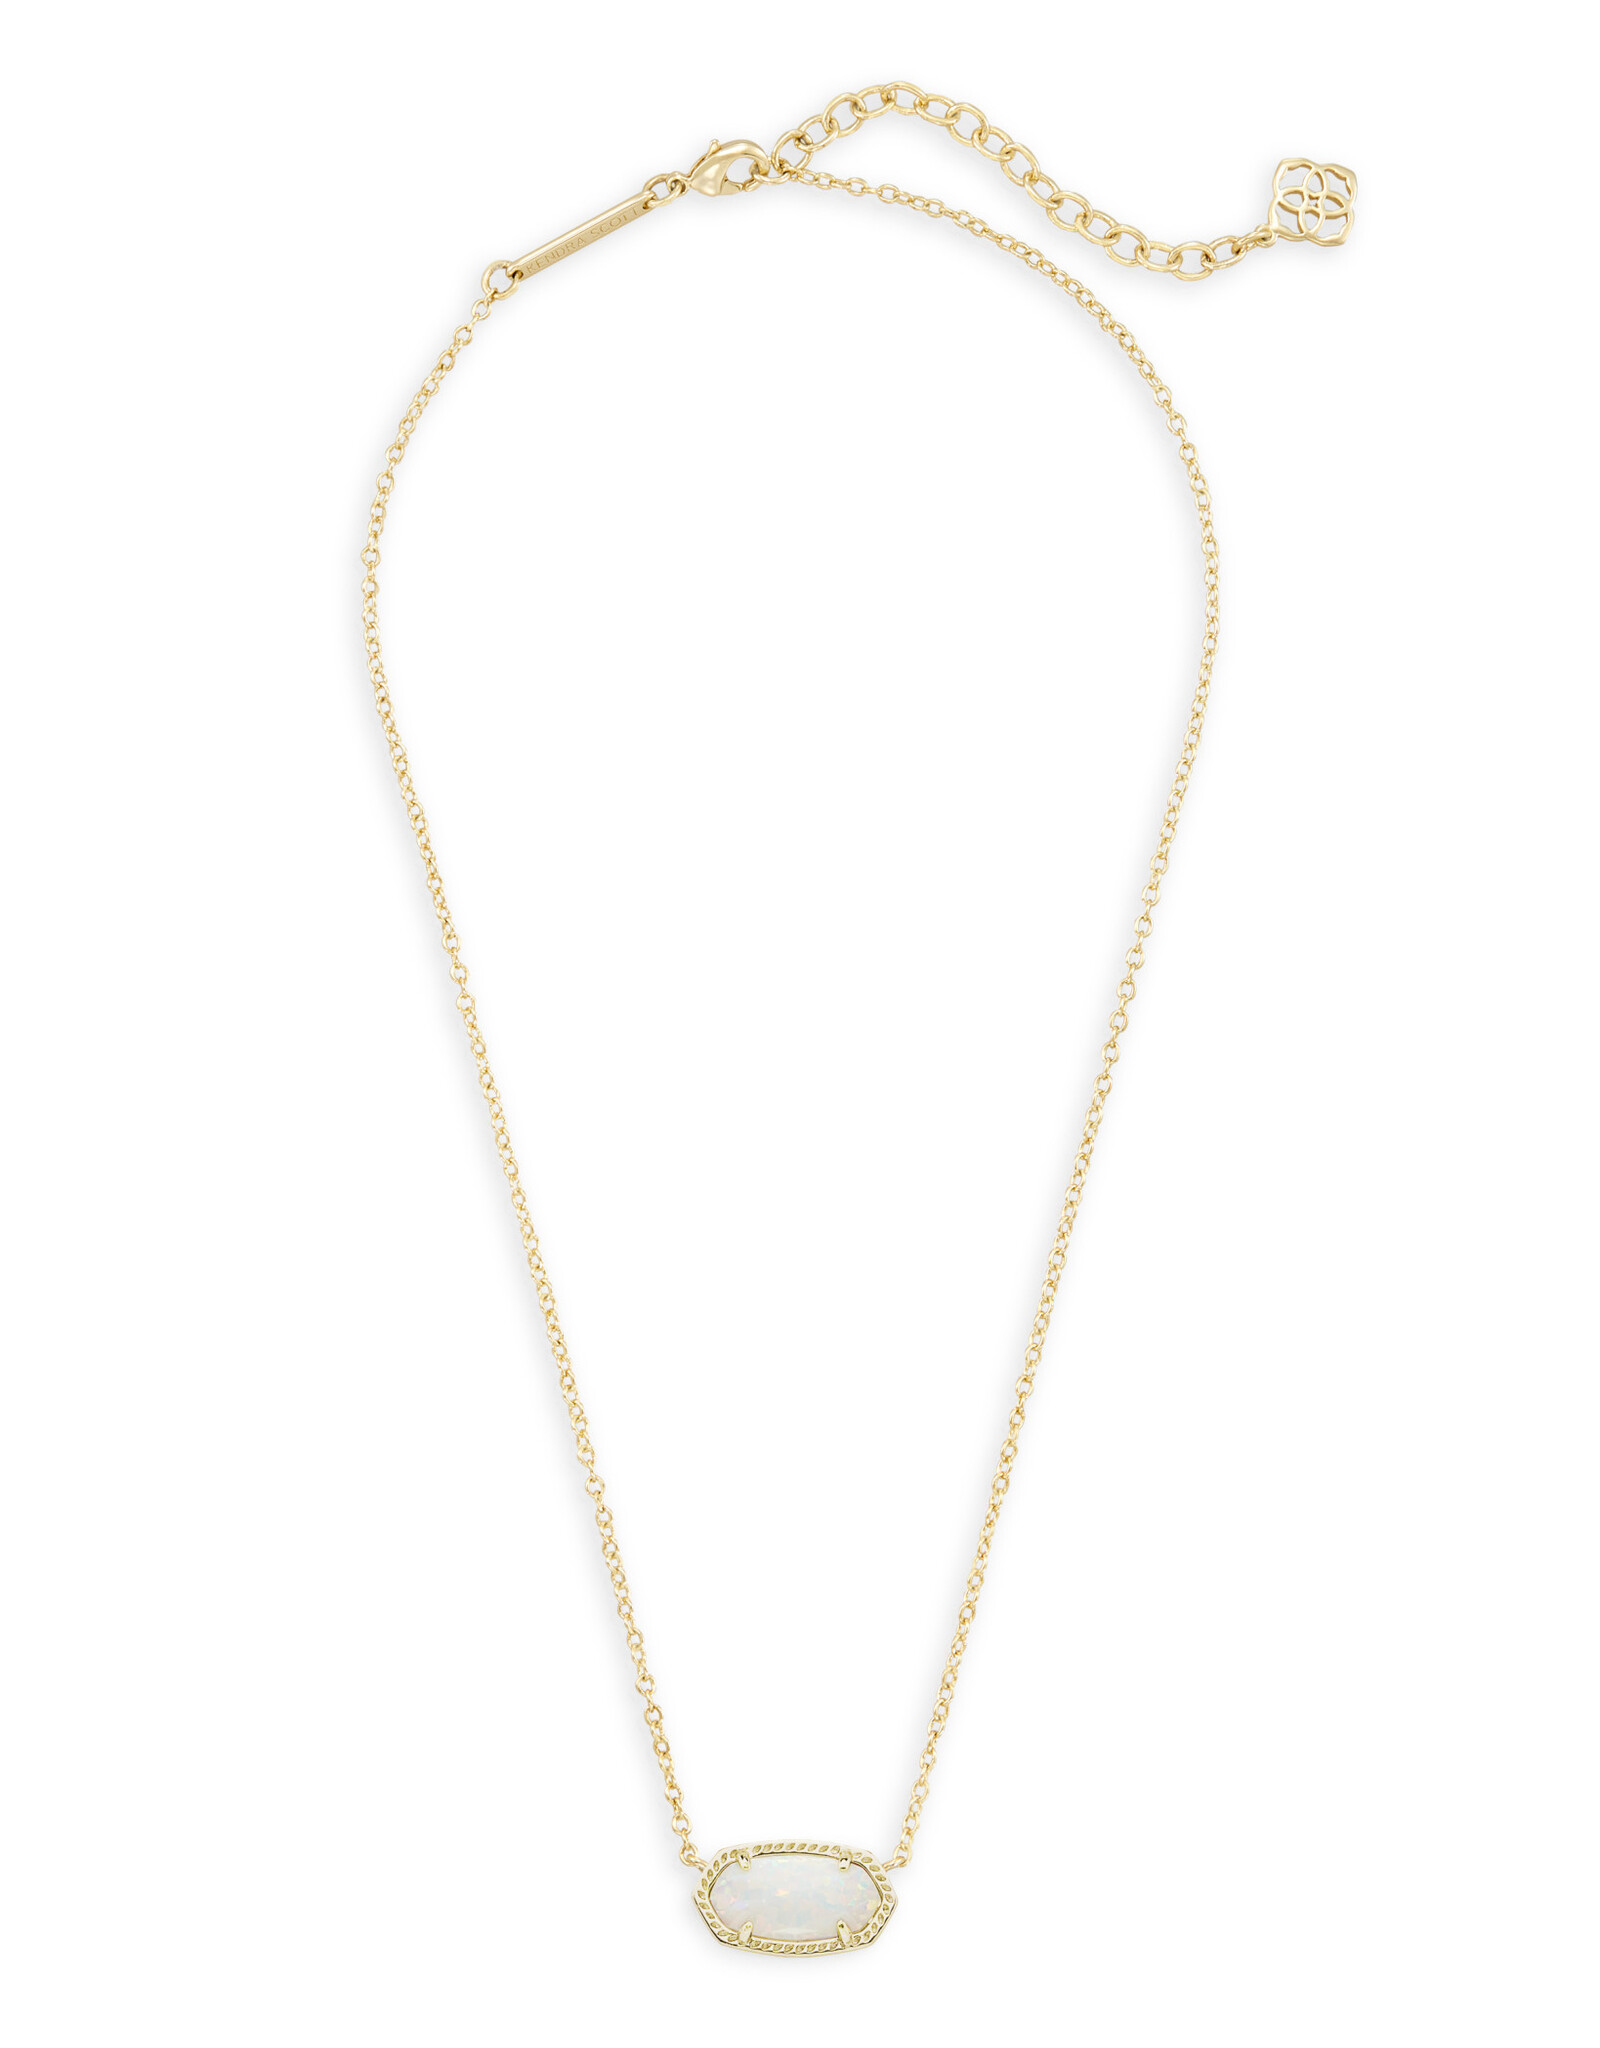 Necklace Elisa Gold White Opal